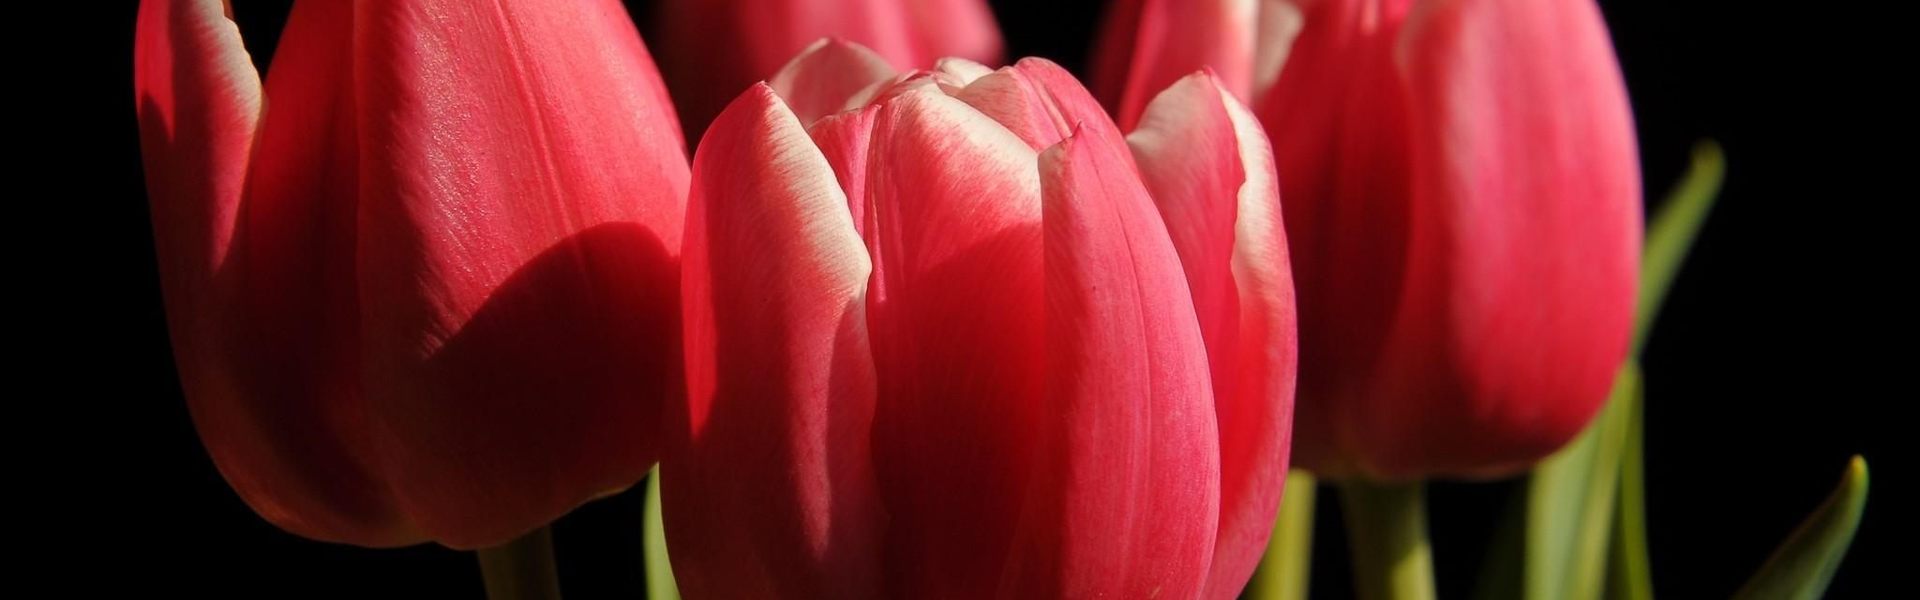 Tulipany hurtowo